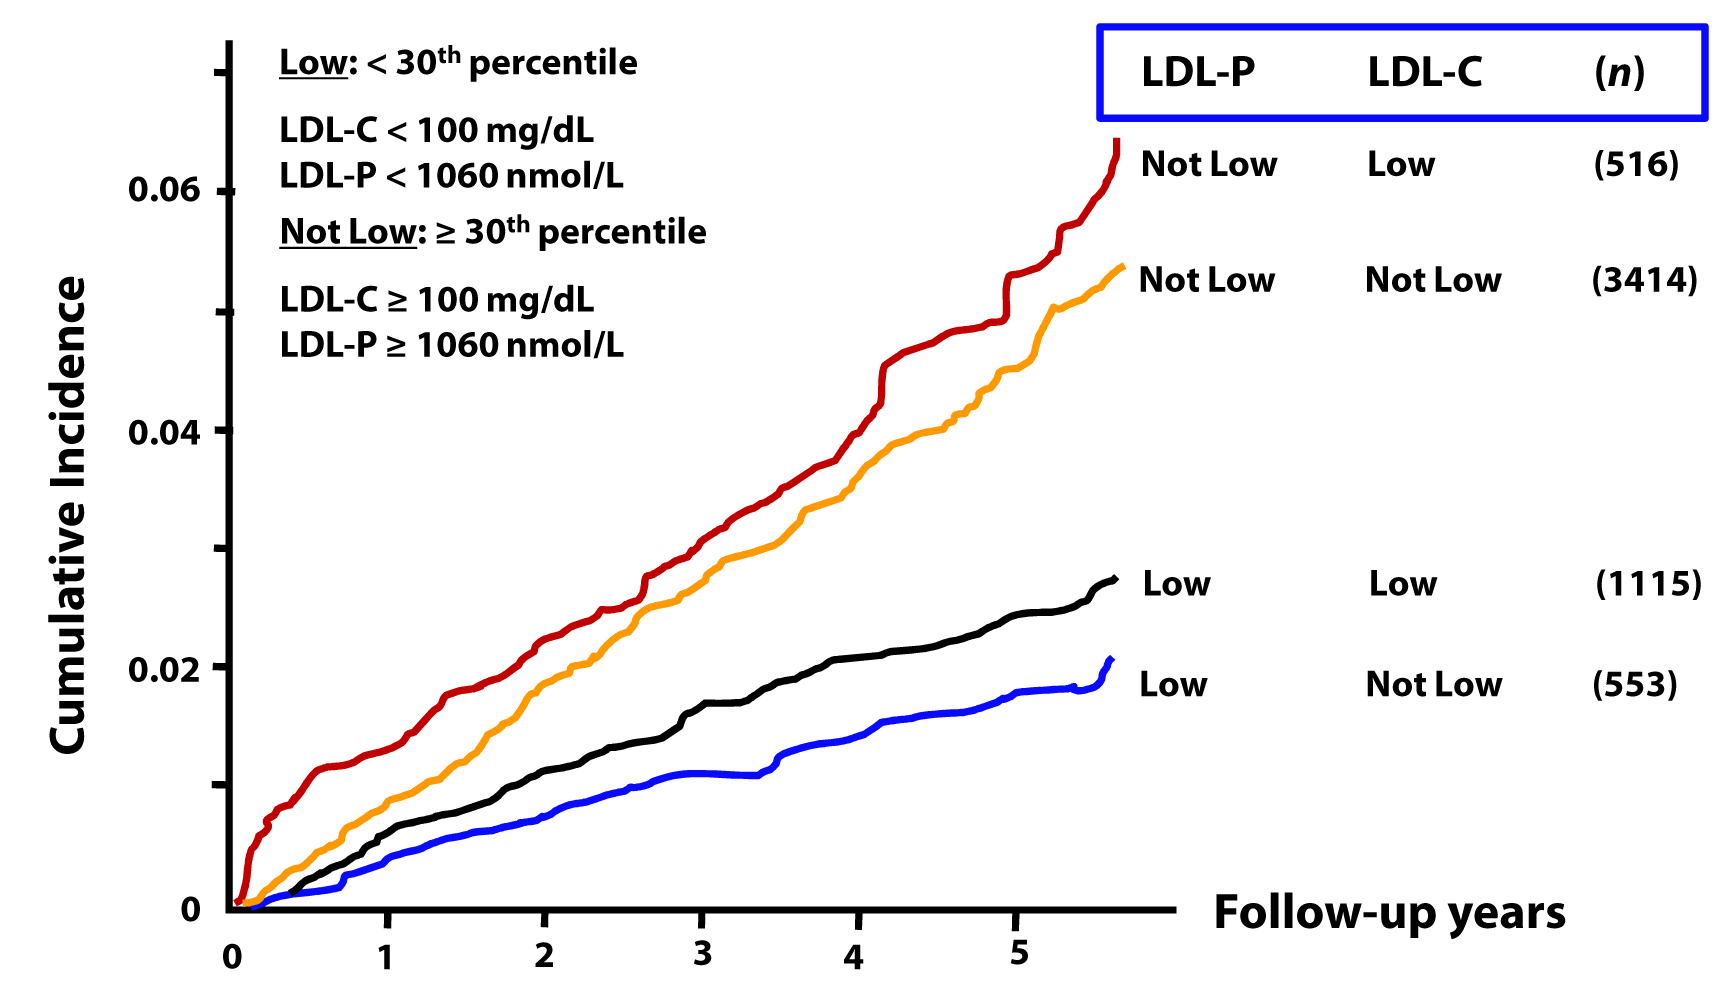 MESA LDLp vs LDLc 4 groups